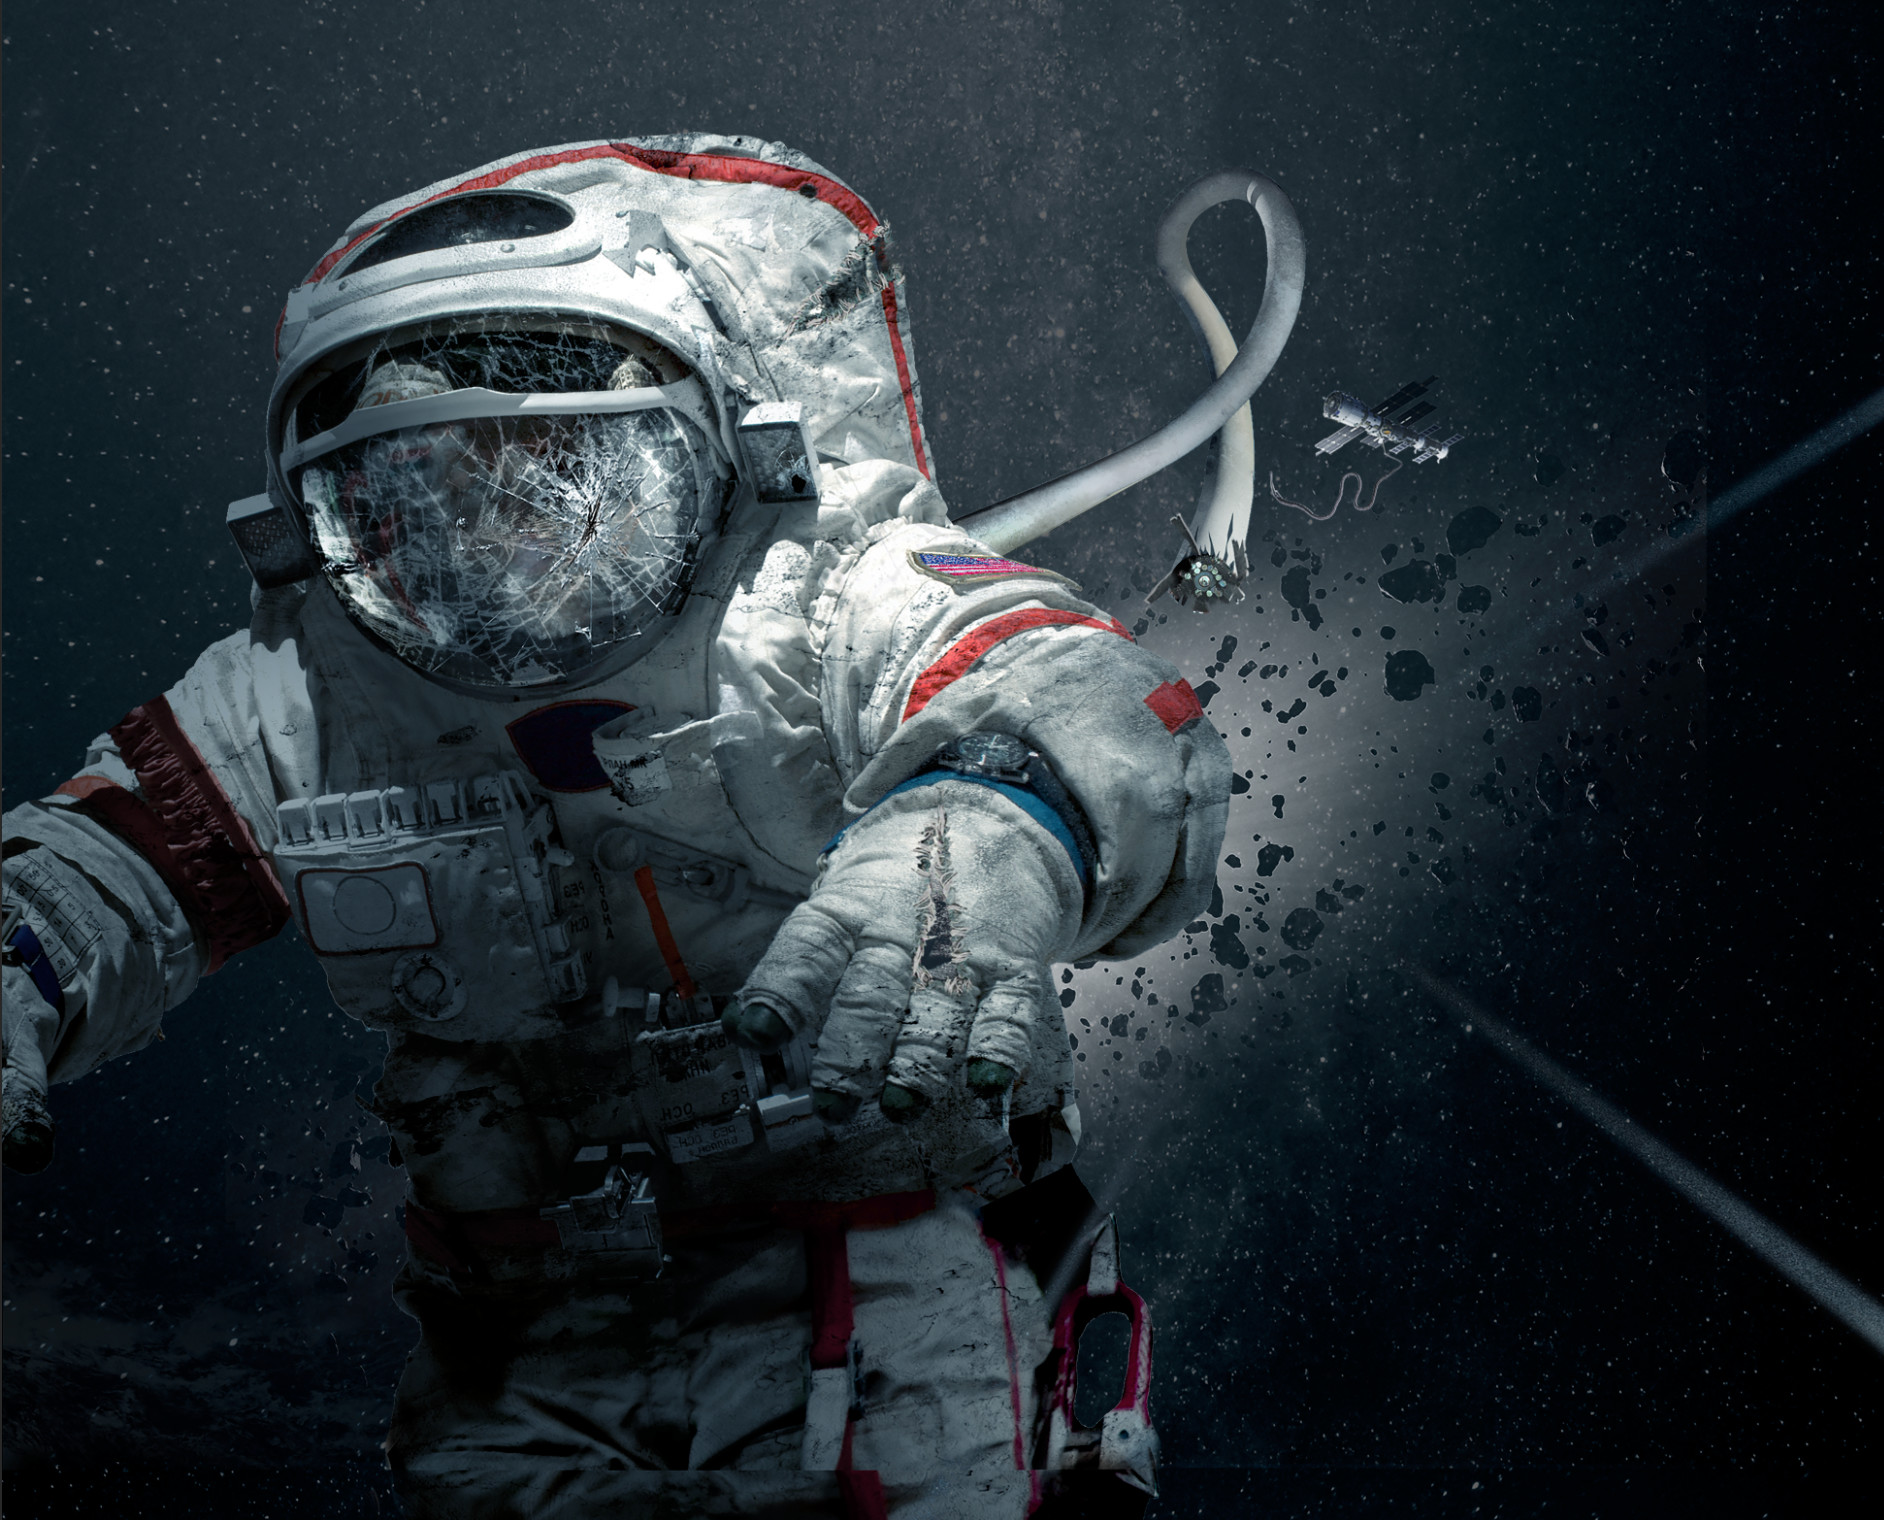 ArtStation - Astronaut lost in space, Nicolai Aaroe